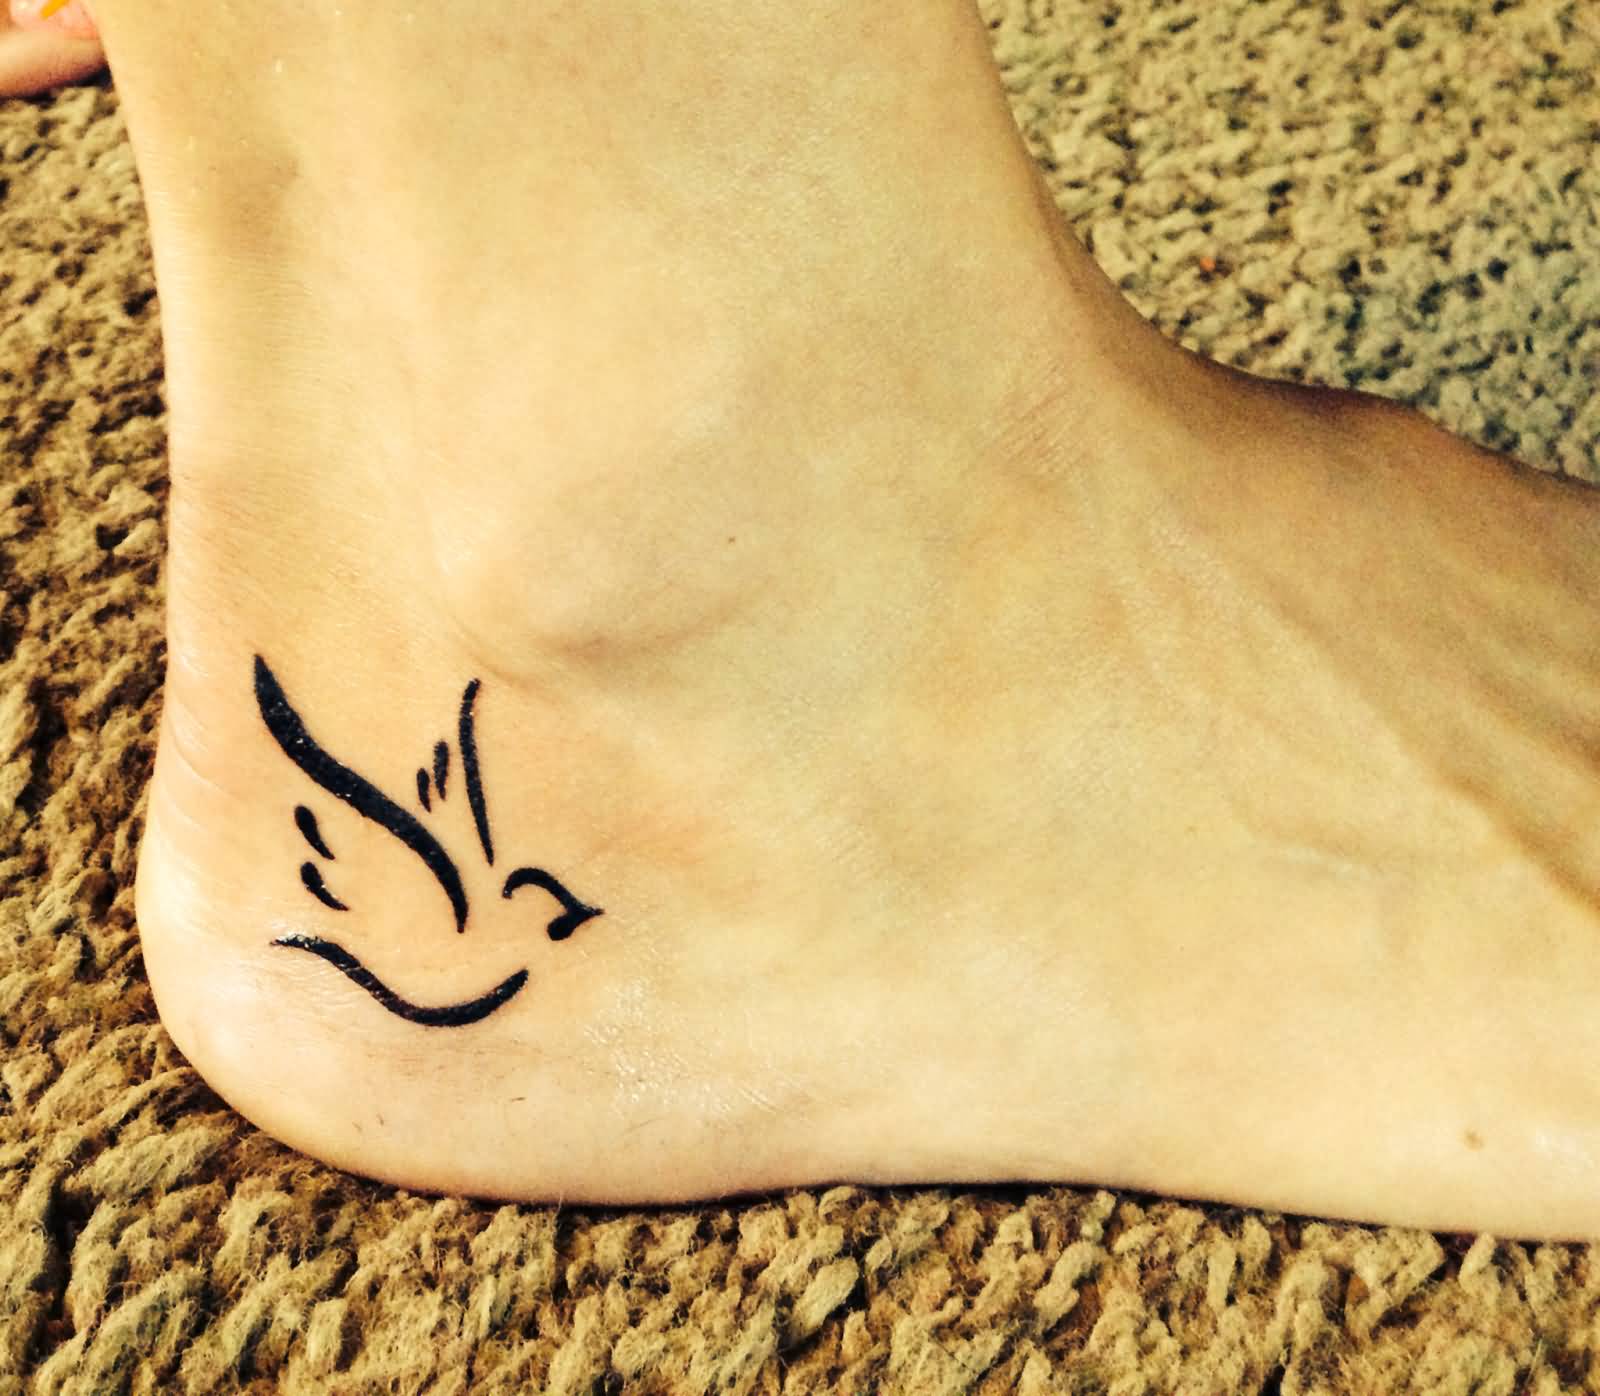 Black Ink Dove Tattoo On Foot